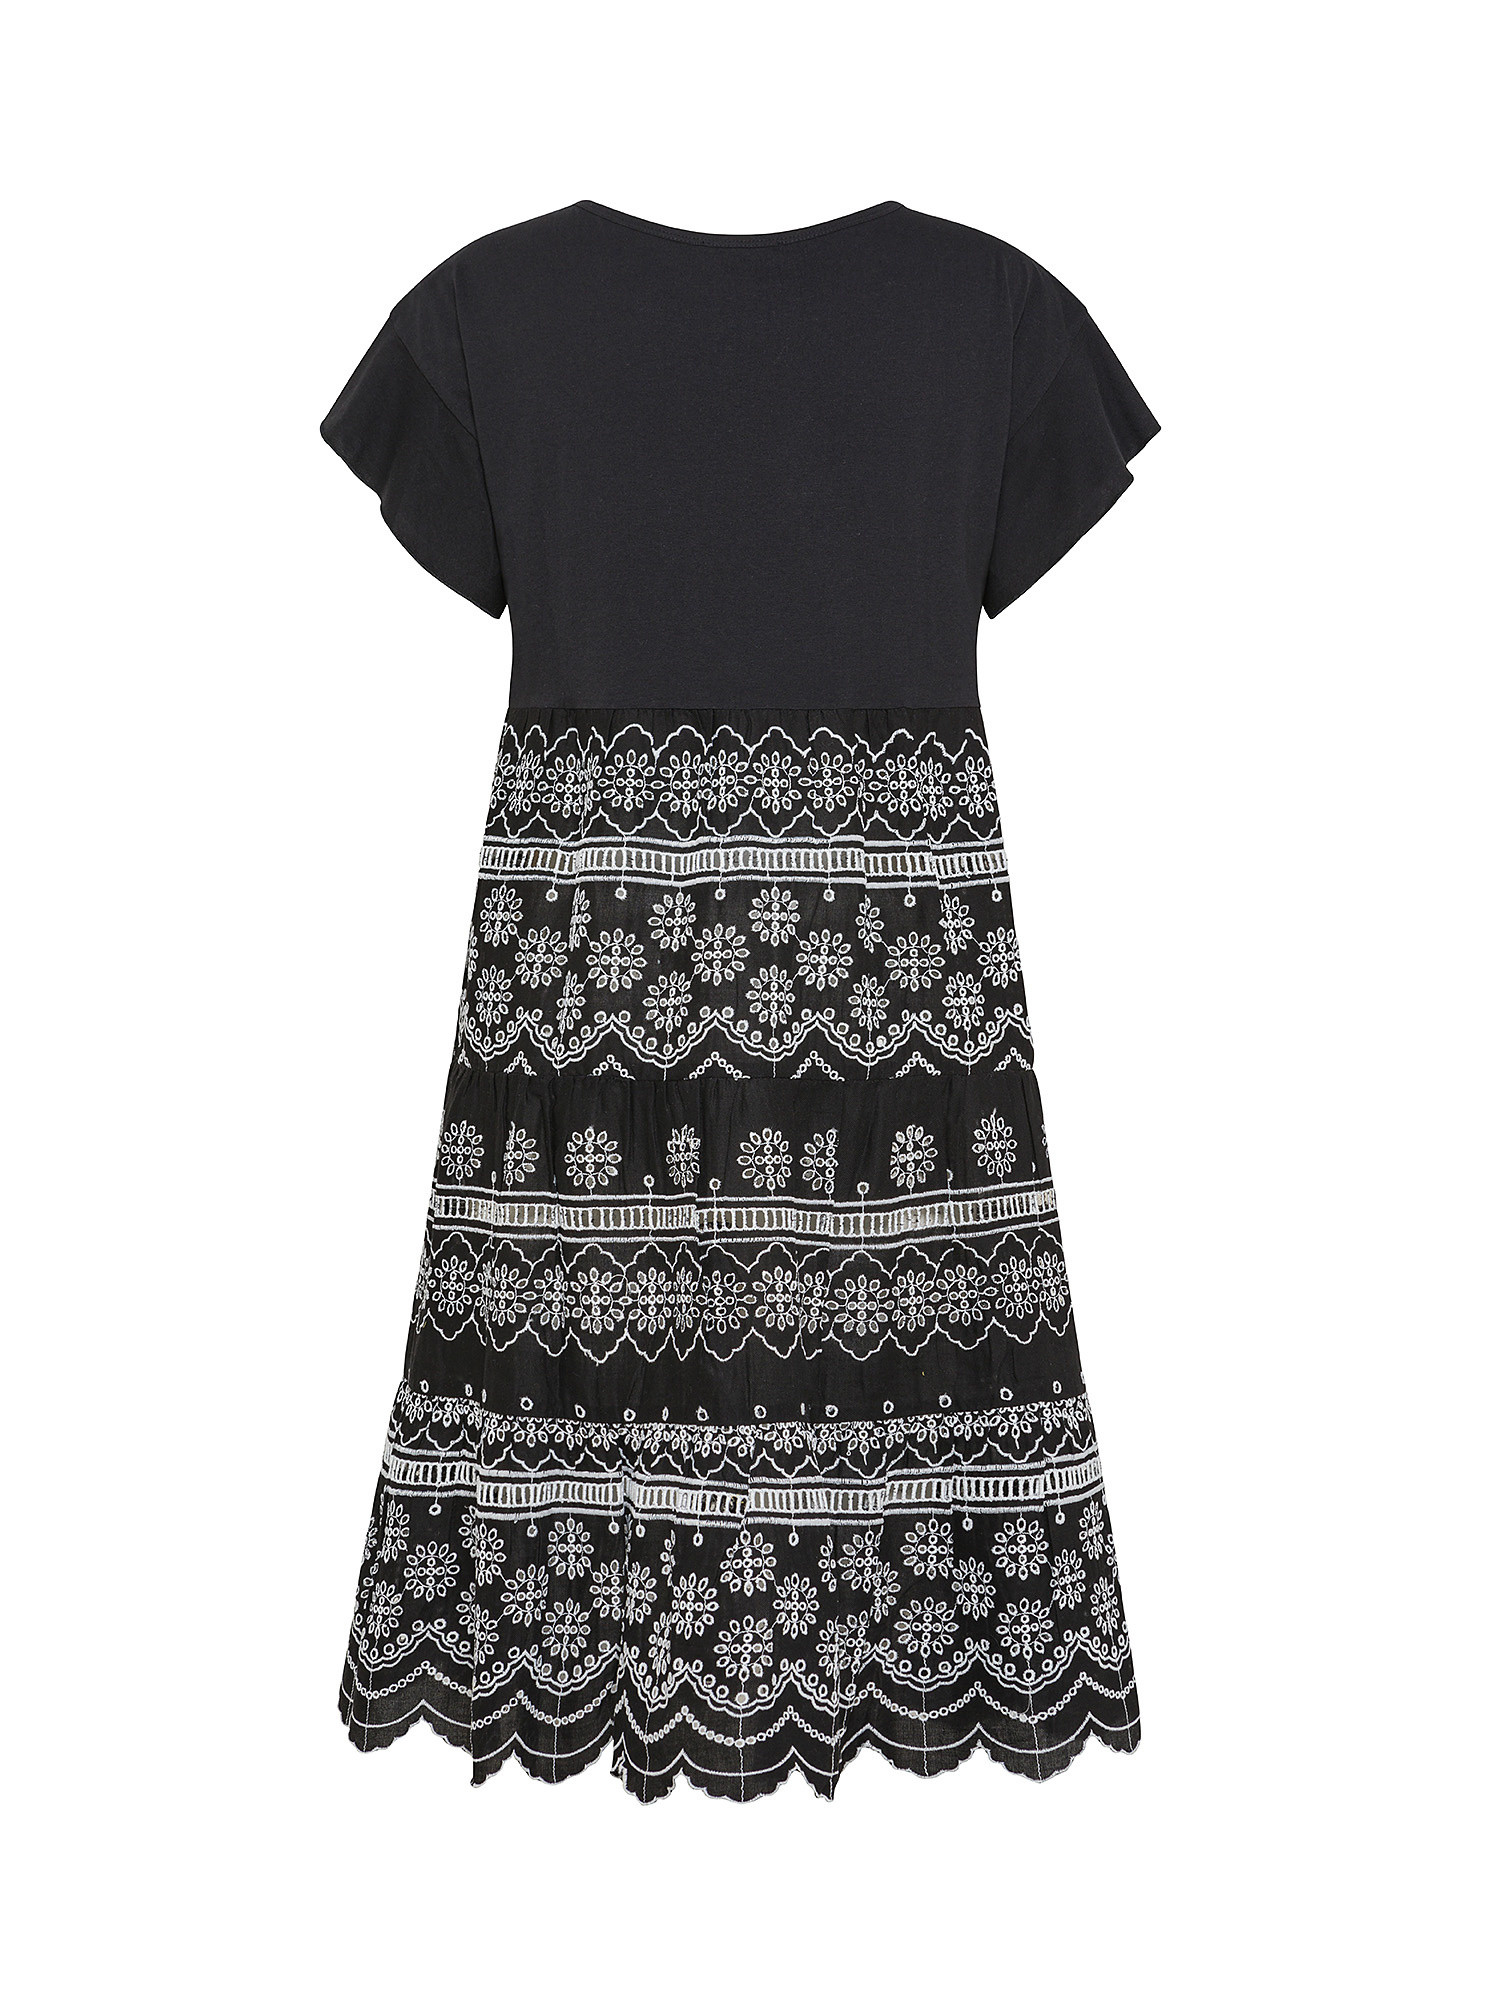 Koan - Cotton dress with flounces, Black, large image number 1